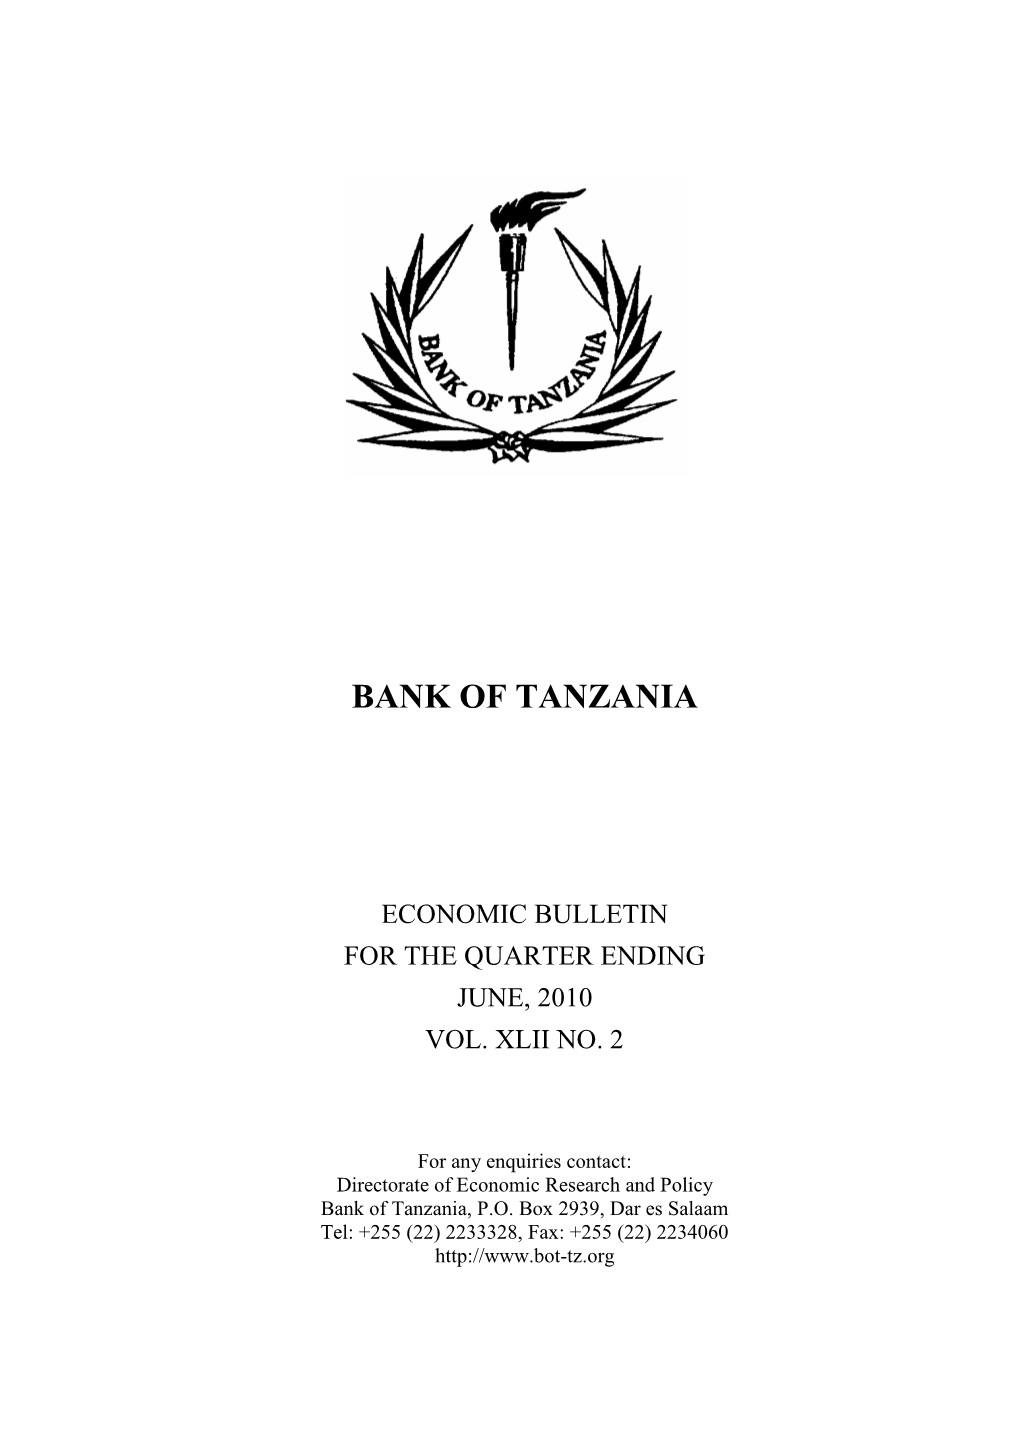 Economic Bulletin for the Quarter Ending June, 2010 Vol. Xlii No. 2